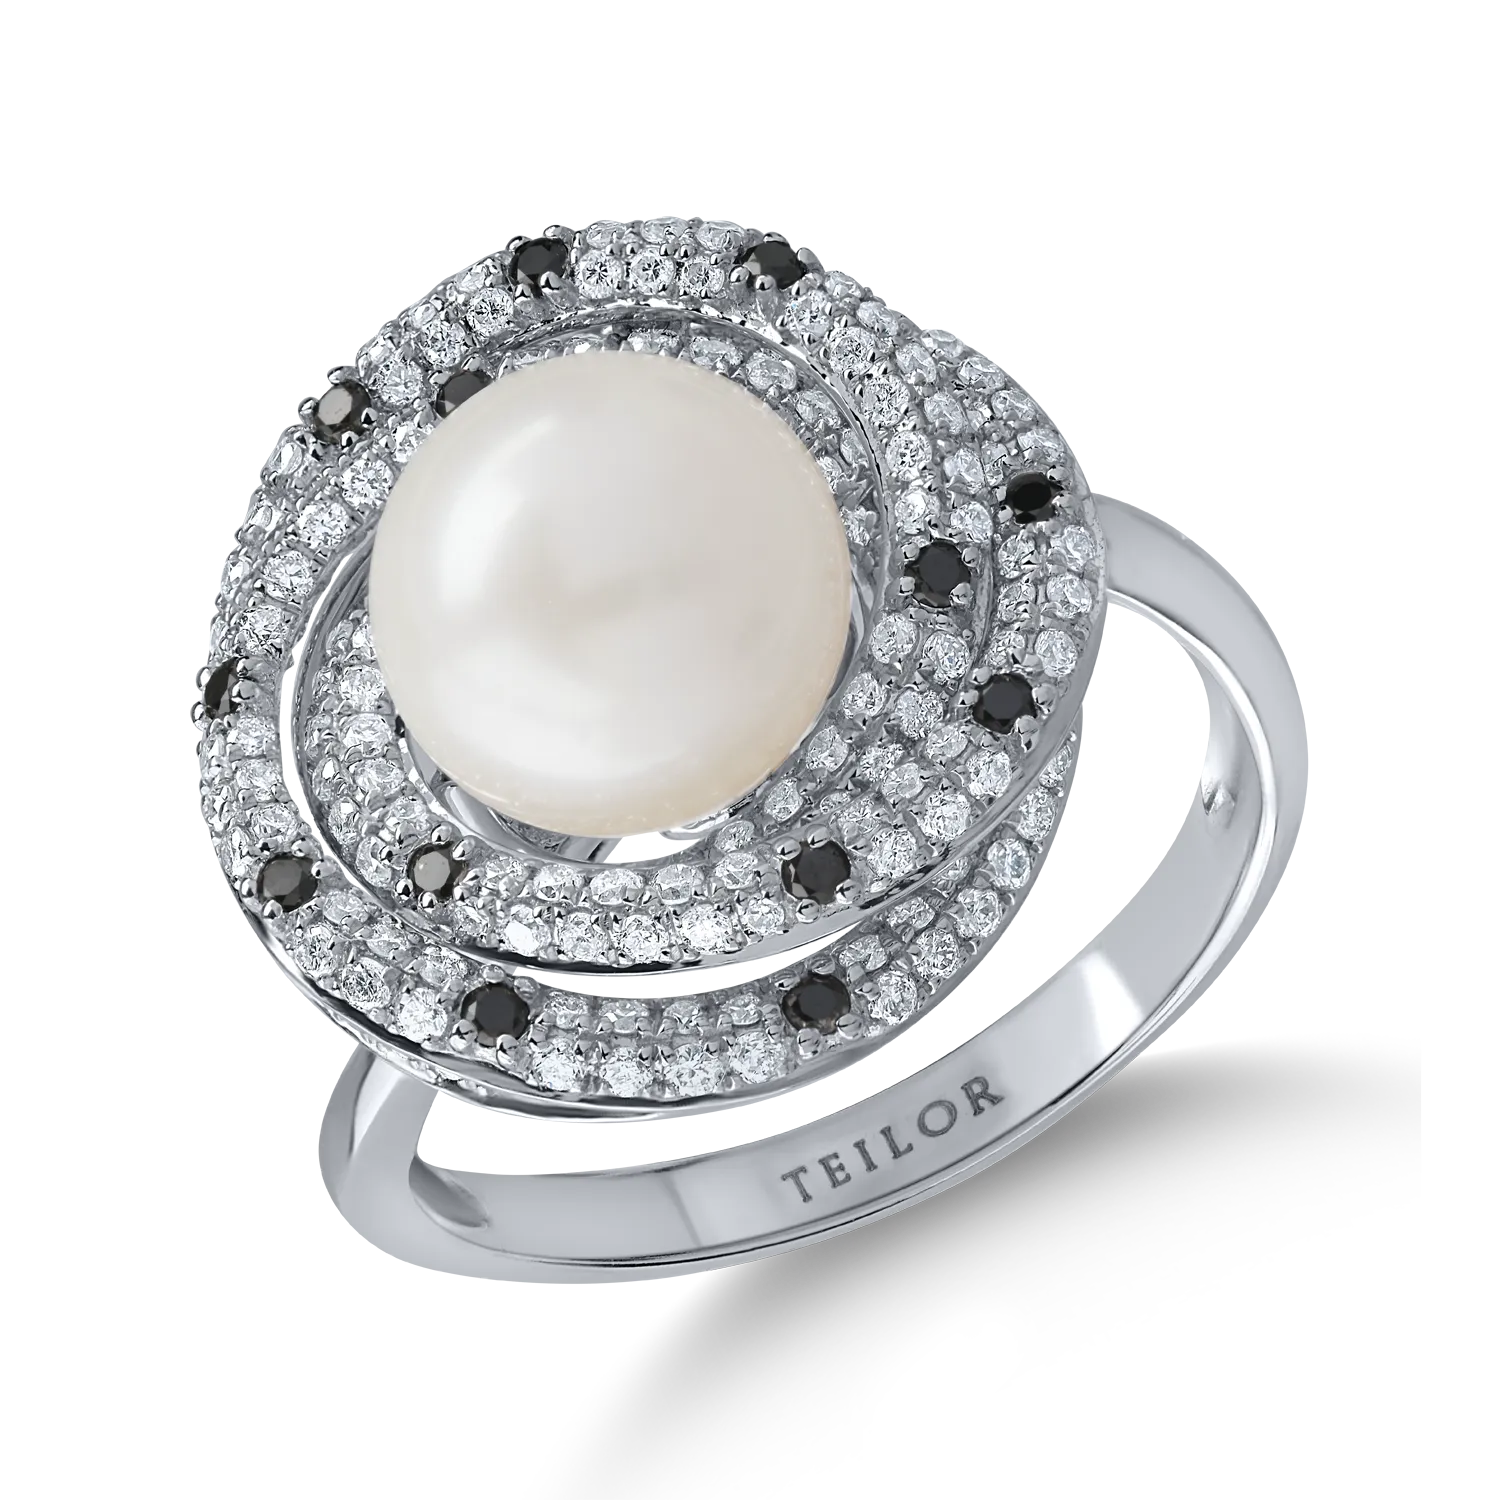 Inel din aur alb cu perla de cultura de 4.6ct si diamante de 0.7ct